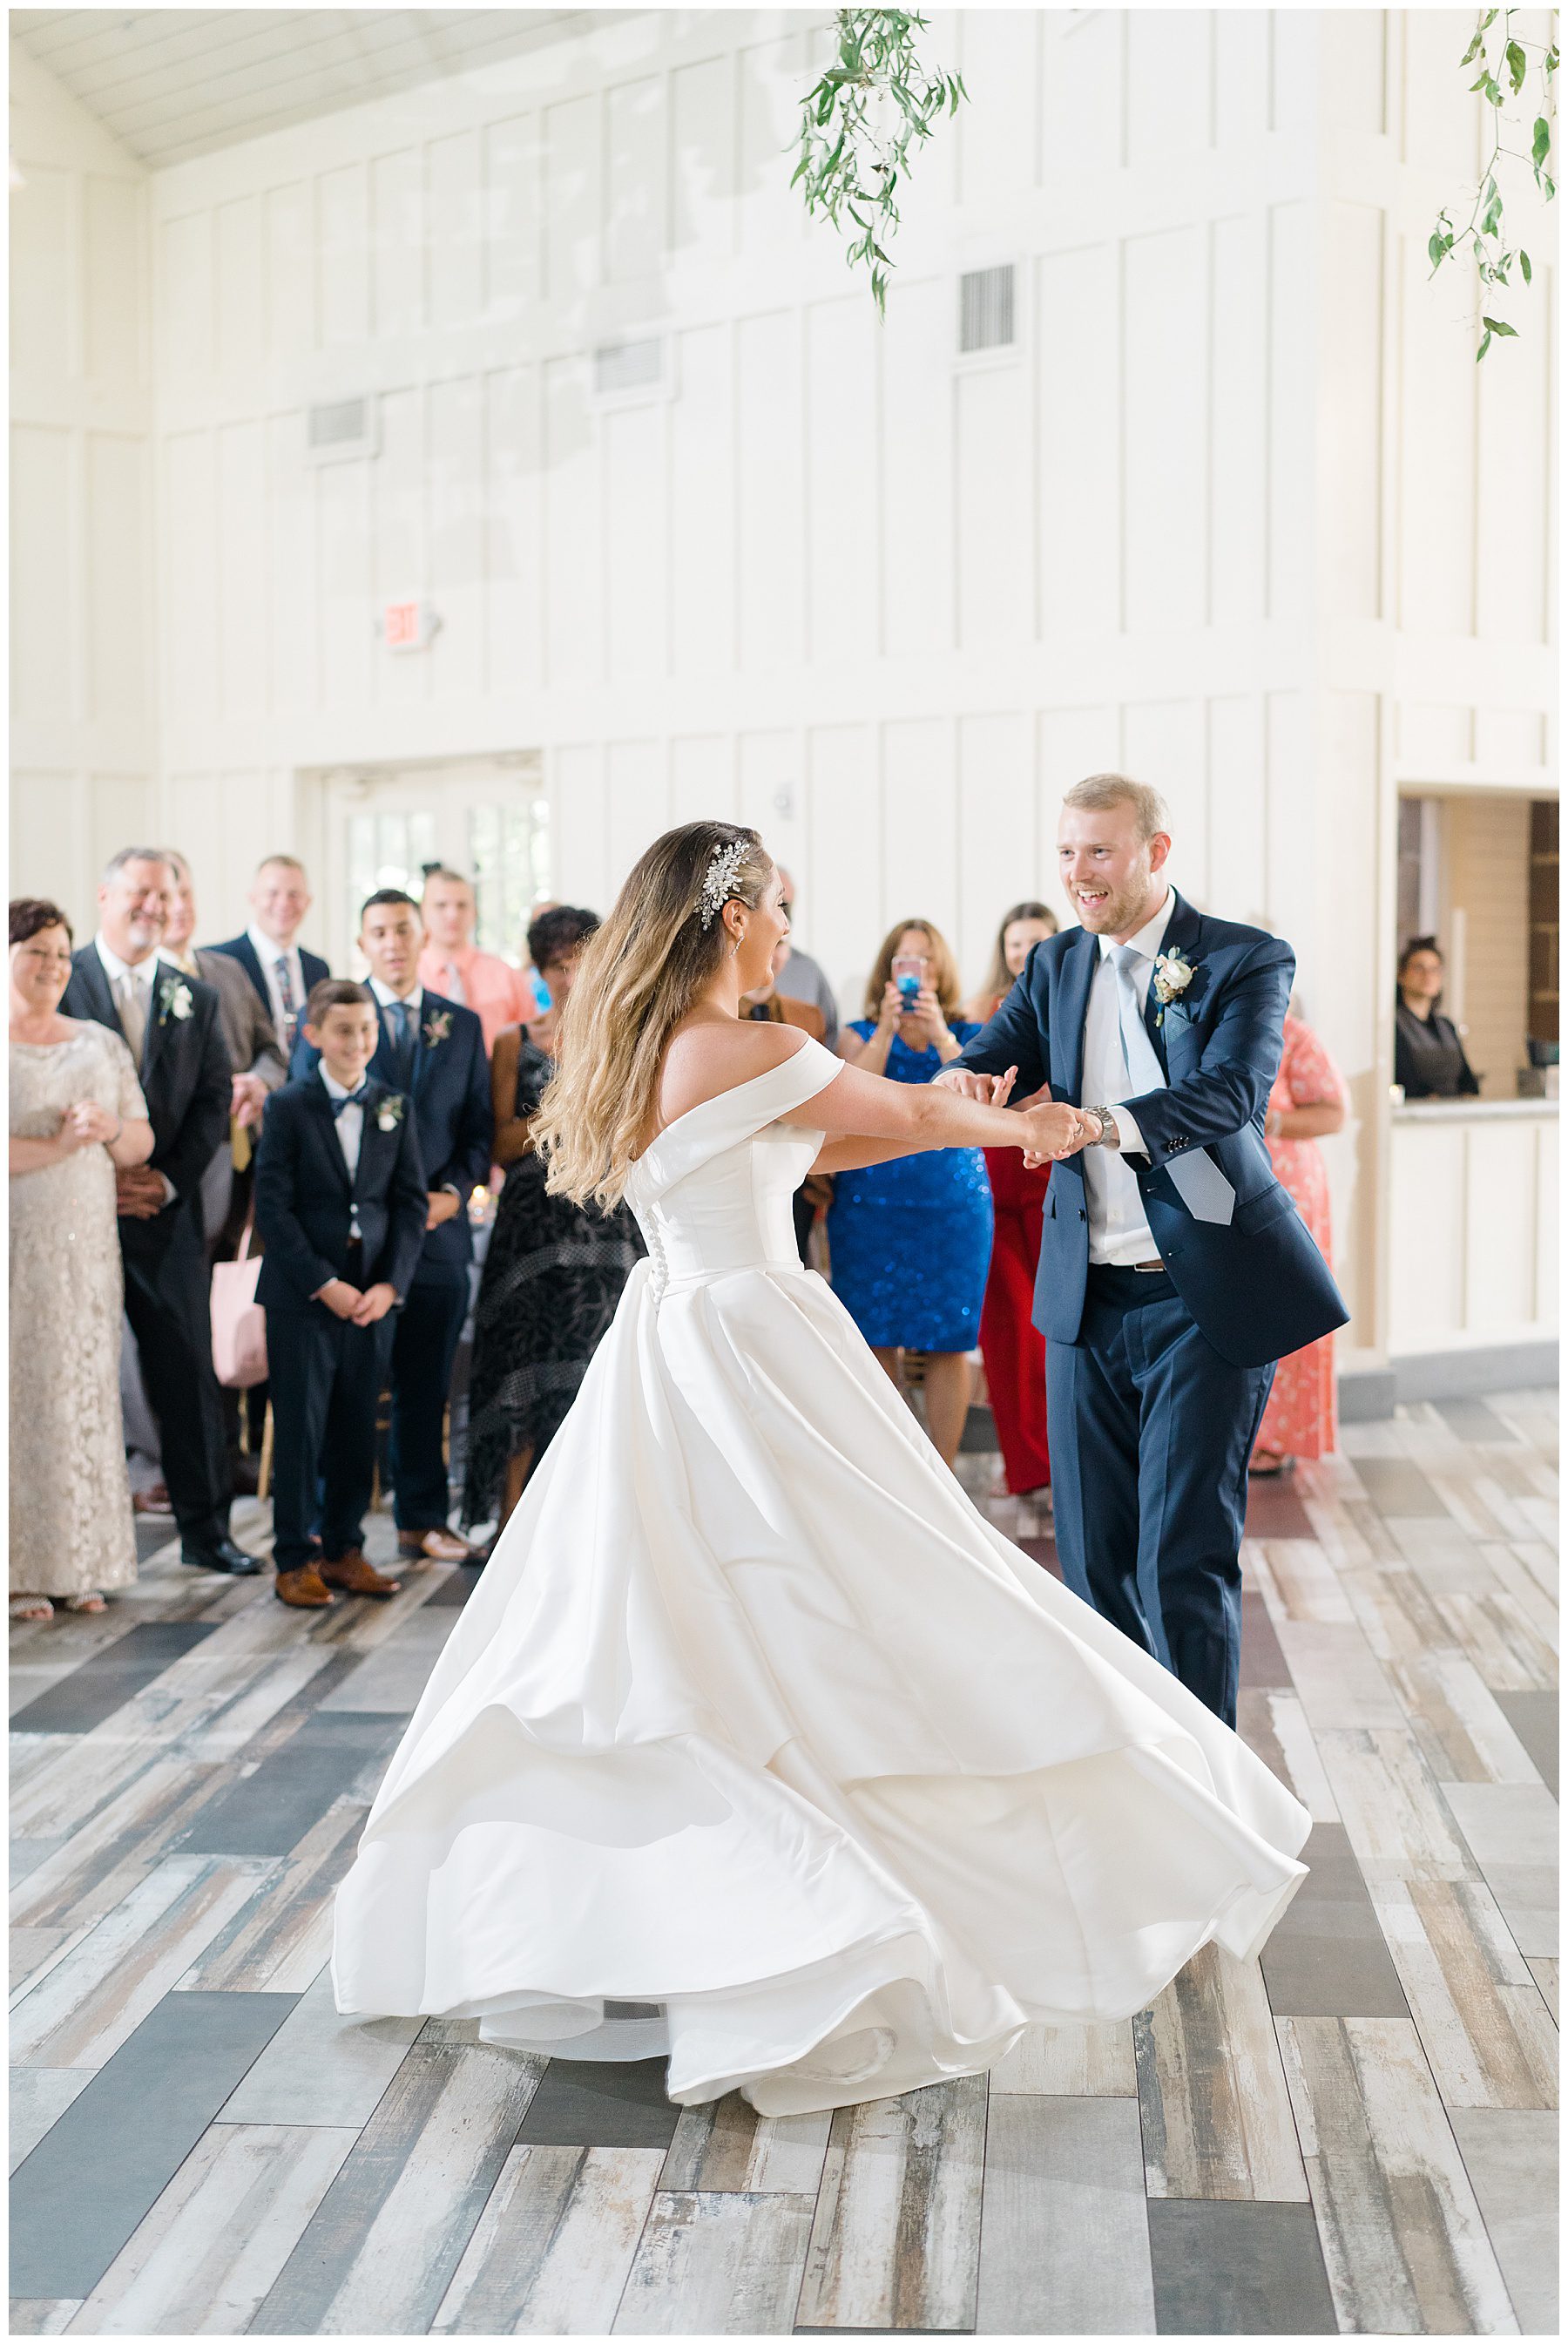 bride and groom dance at Ryland Inn Coach House Wedding reception